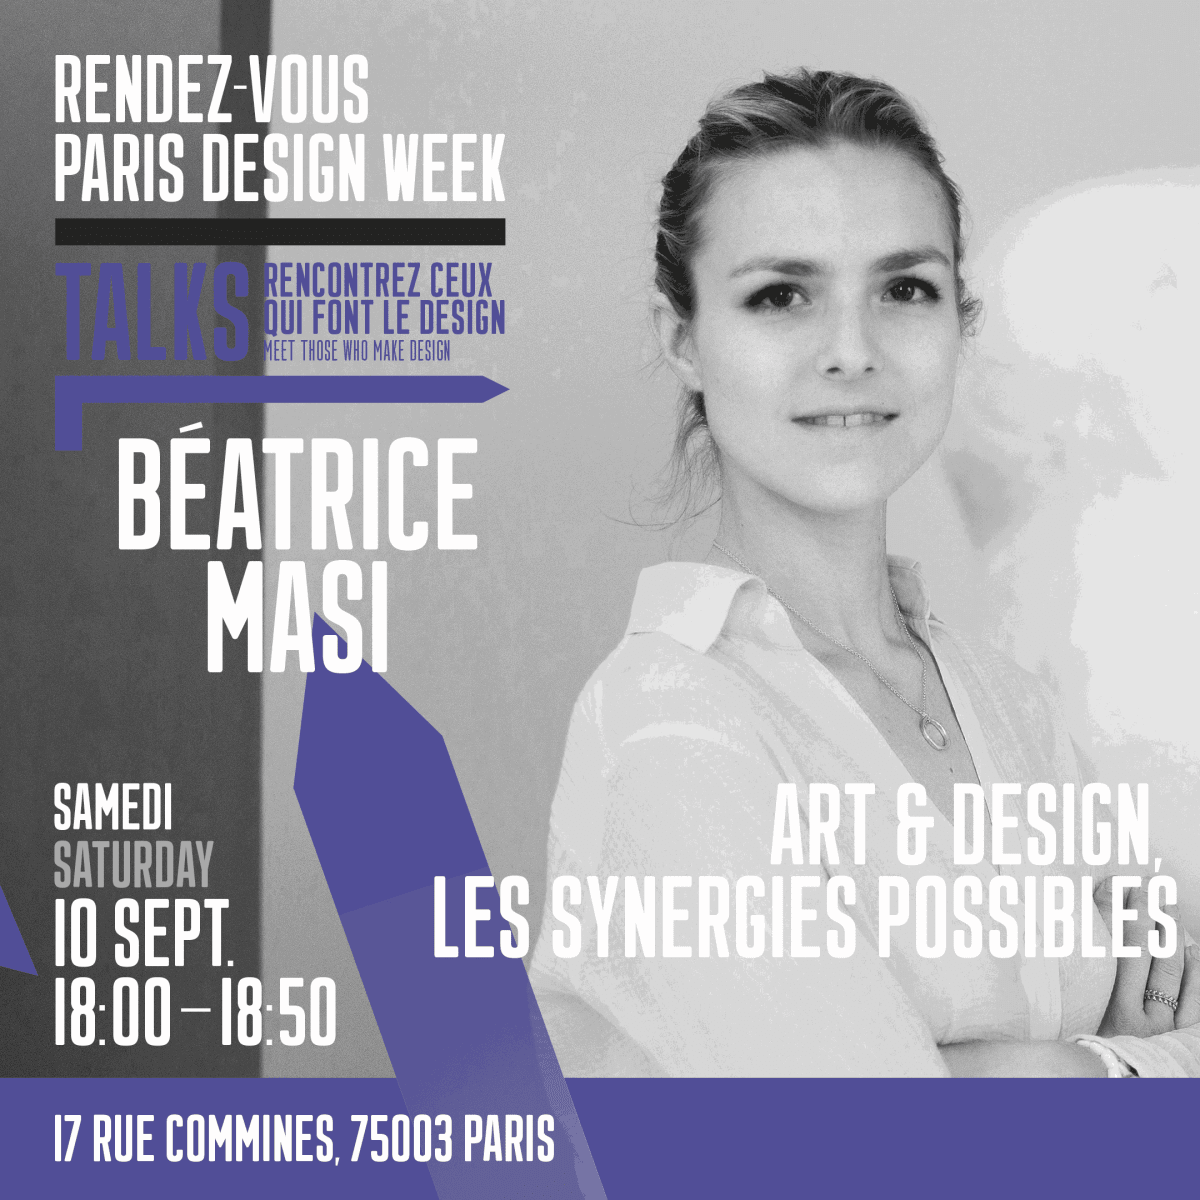 Talk Paris Design Week 2022 "Art & Design"